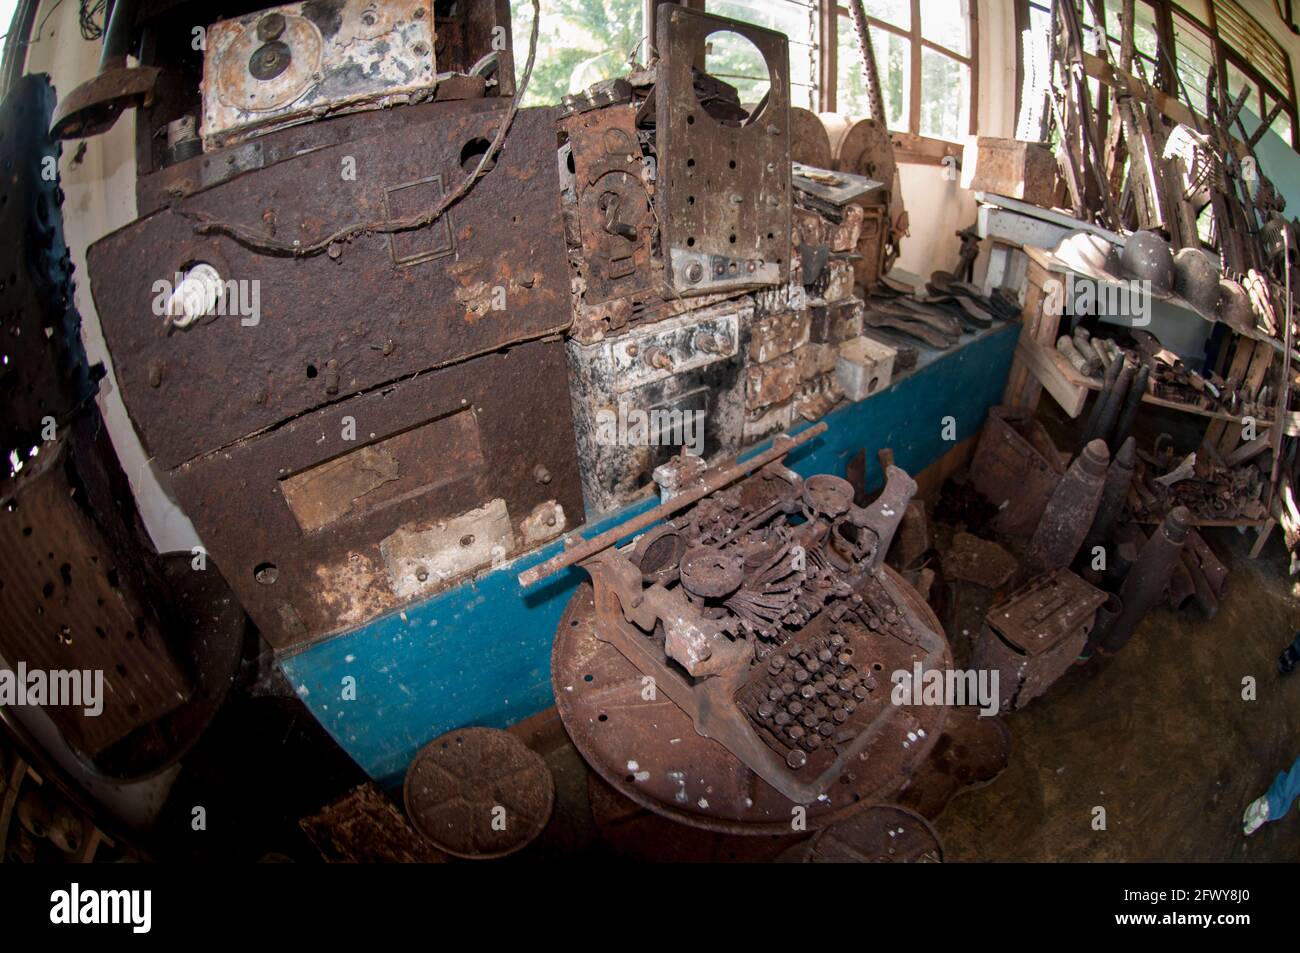 Japanese World War II typewriter, radios, firearms and ammunition, Gua Binsari where 5000 Japanese were killed, Biak, West Papua, Indonesia Stock Photo